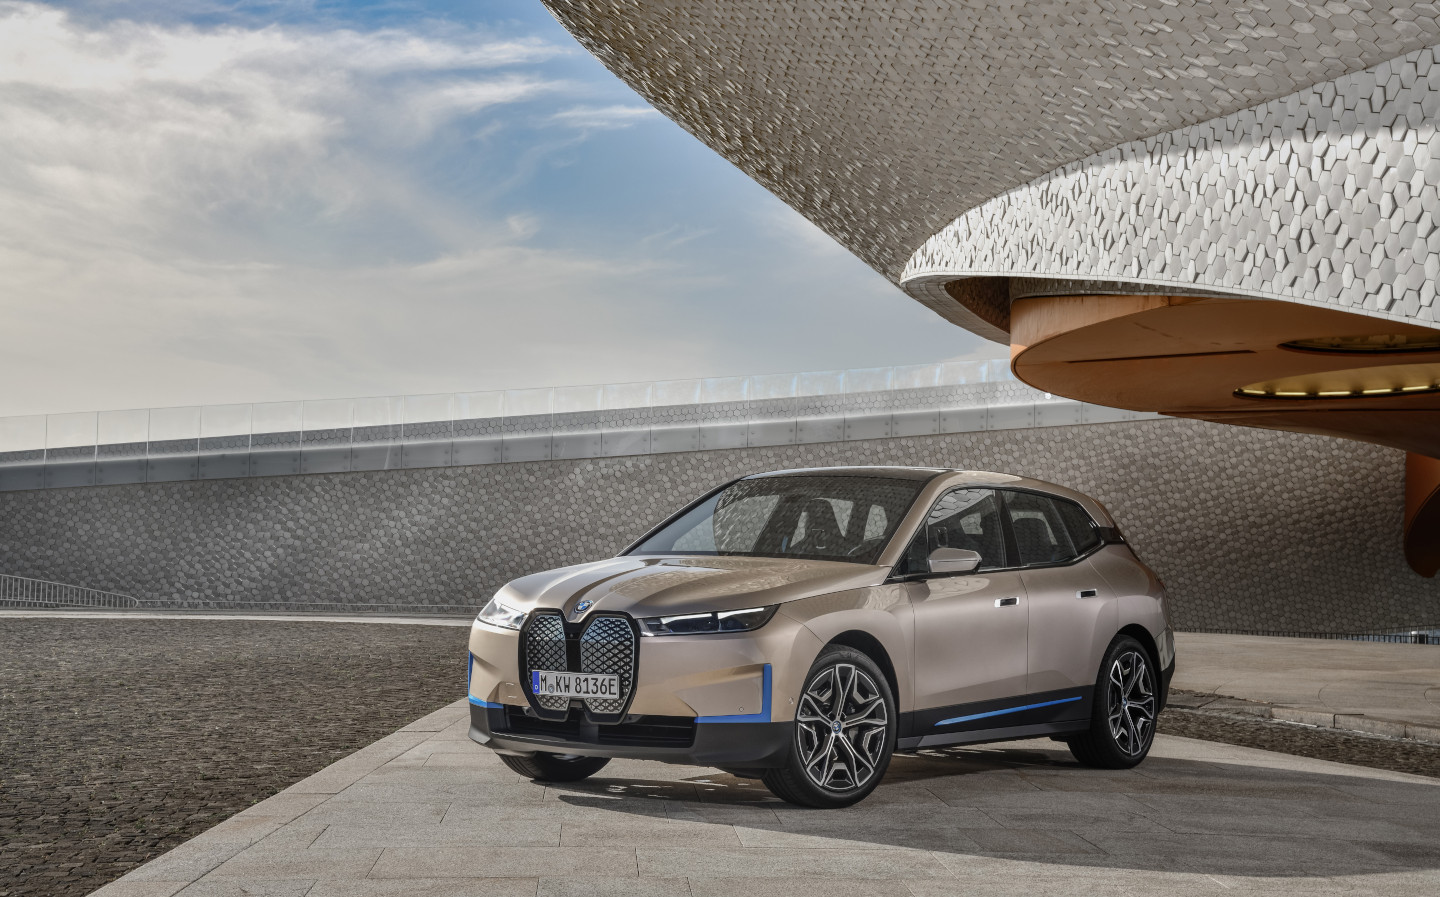 BMW unveils iX electric SUV with 373-mile range